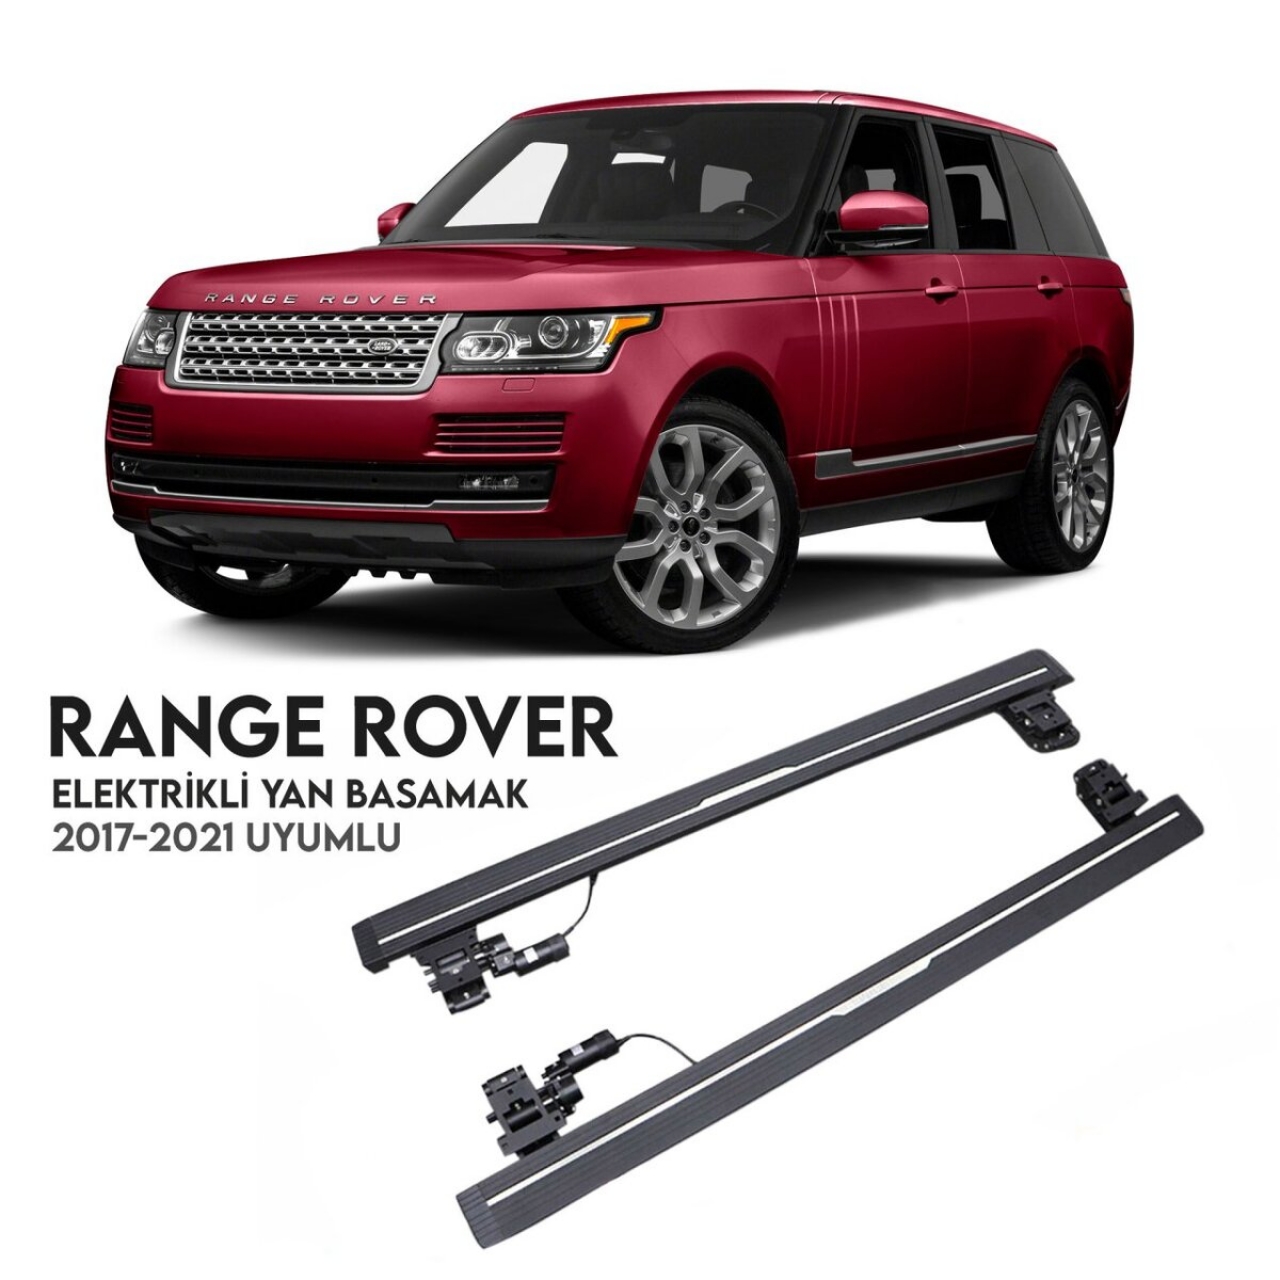 Range Rover 2017-2021 Elektrikli Yan Basamak